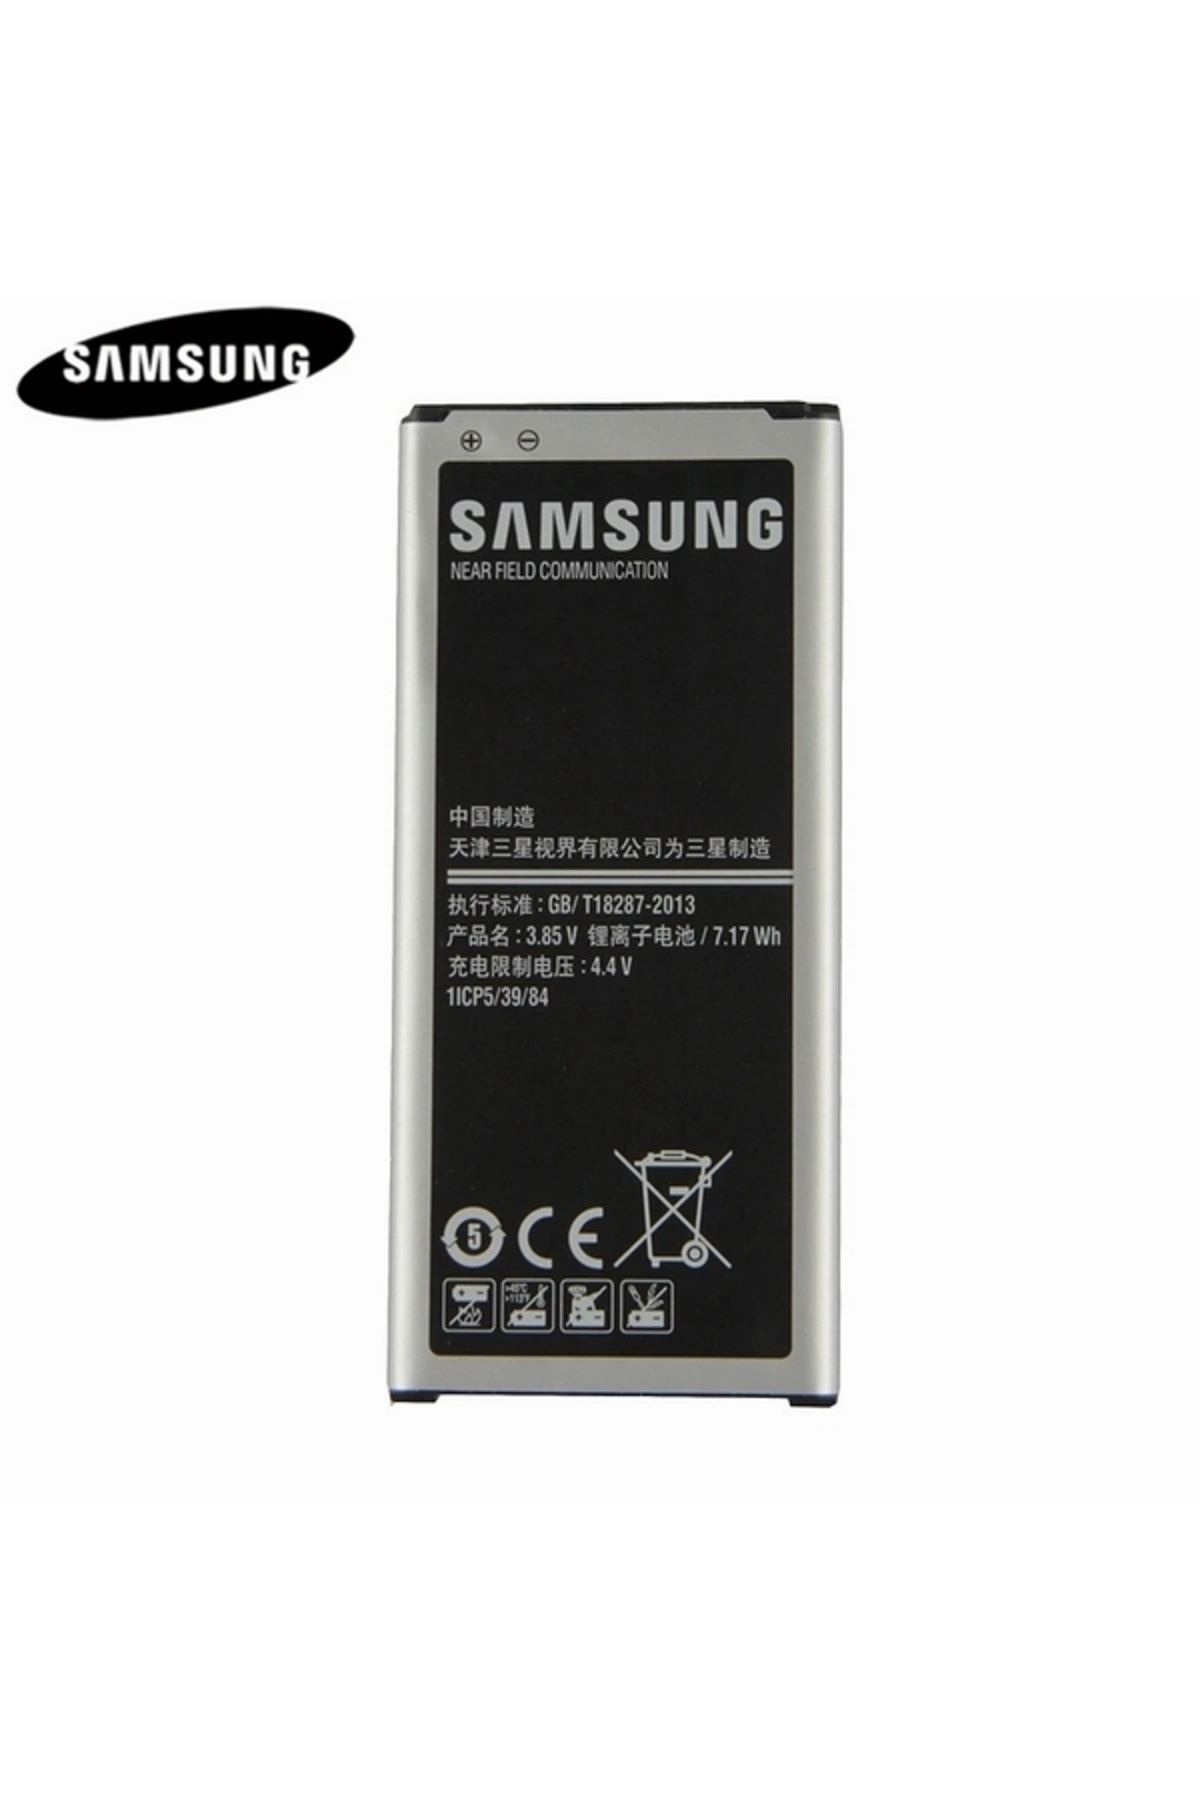 Genel Markalar Samsung Galaxy Alpha G8508s Eb-bg850bbc Eb-bg850bbu Eb-bg850bbe 1860mah Batarya 2 Yıl Garanti